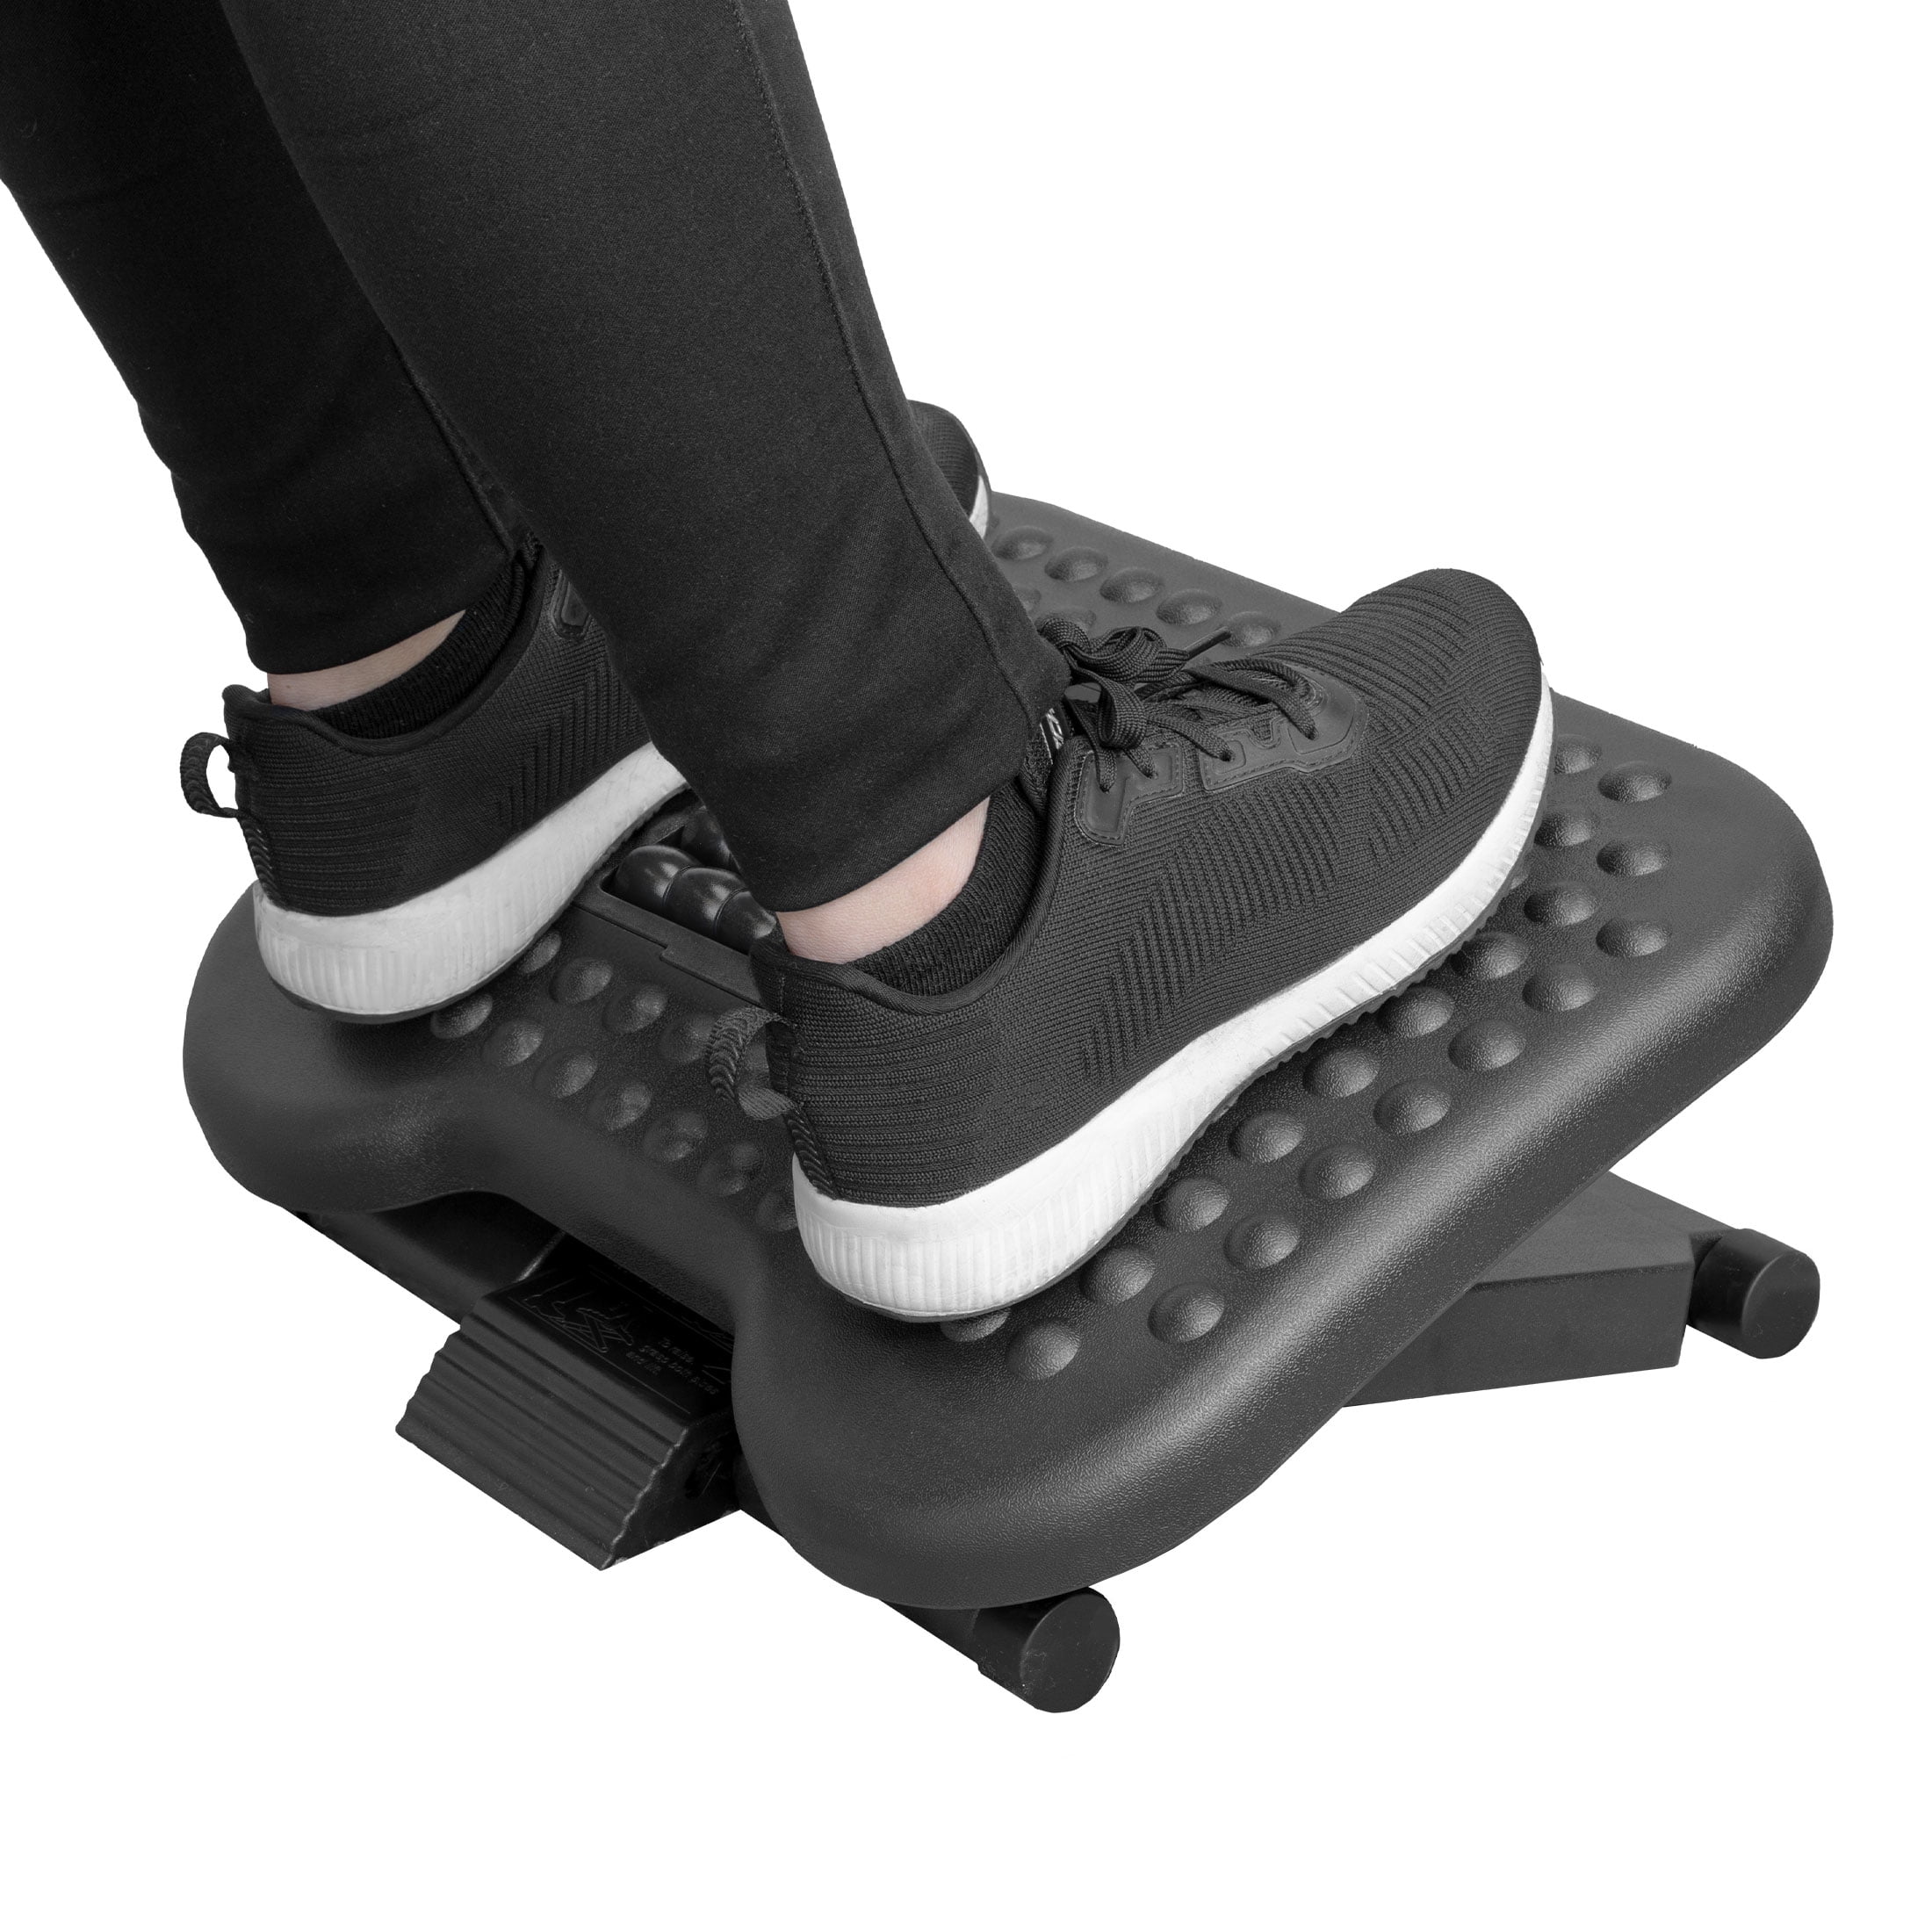 Mount-It! Ergonomic Under Desk Footrest | Massaging Foot Rest Support |  Tilting Footrest with 3-Level Height Adjustment | Under Chair Office  Footrest